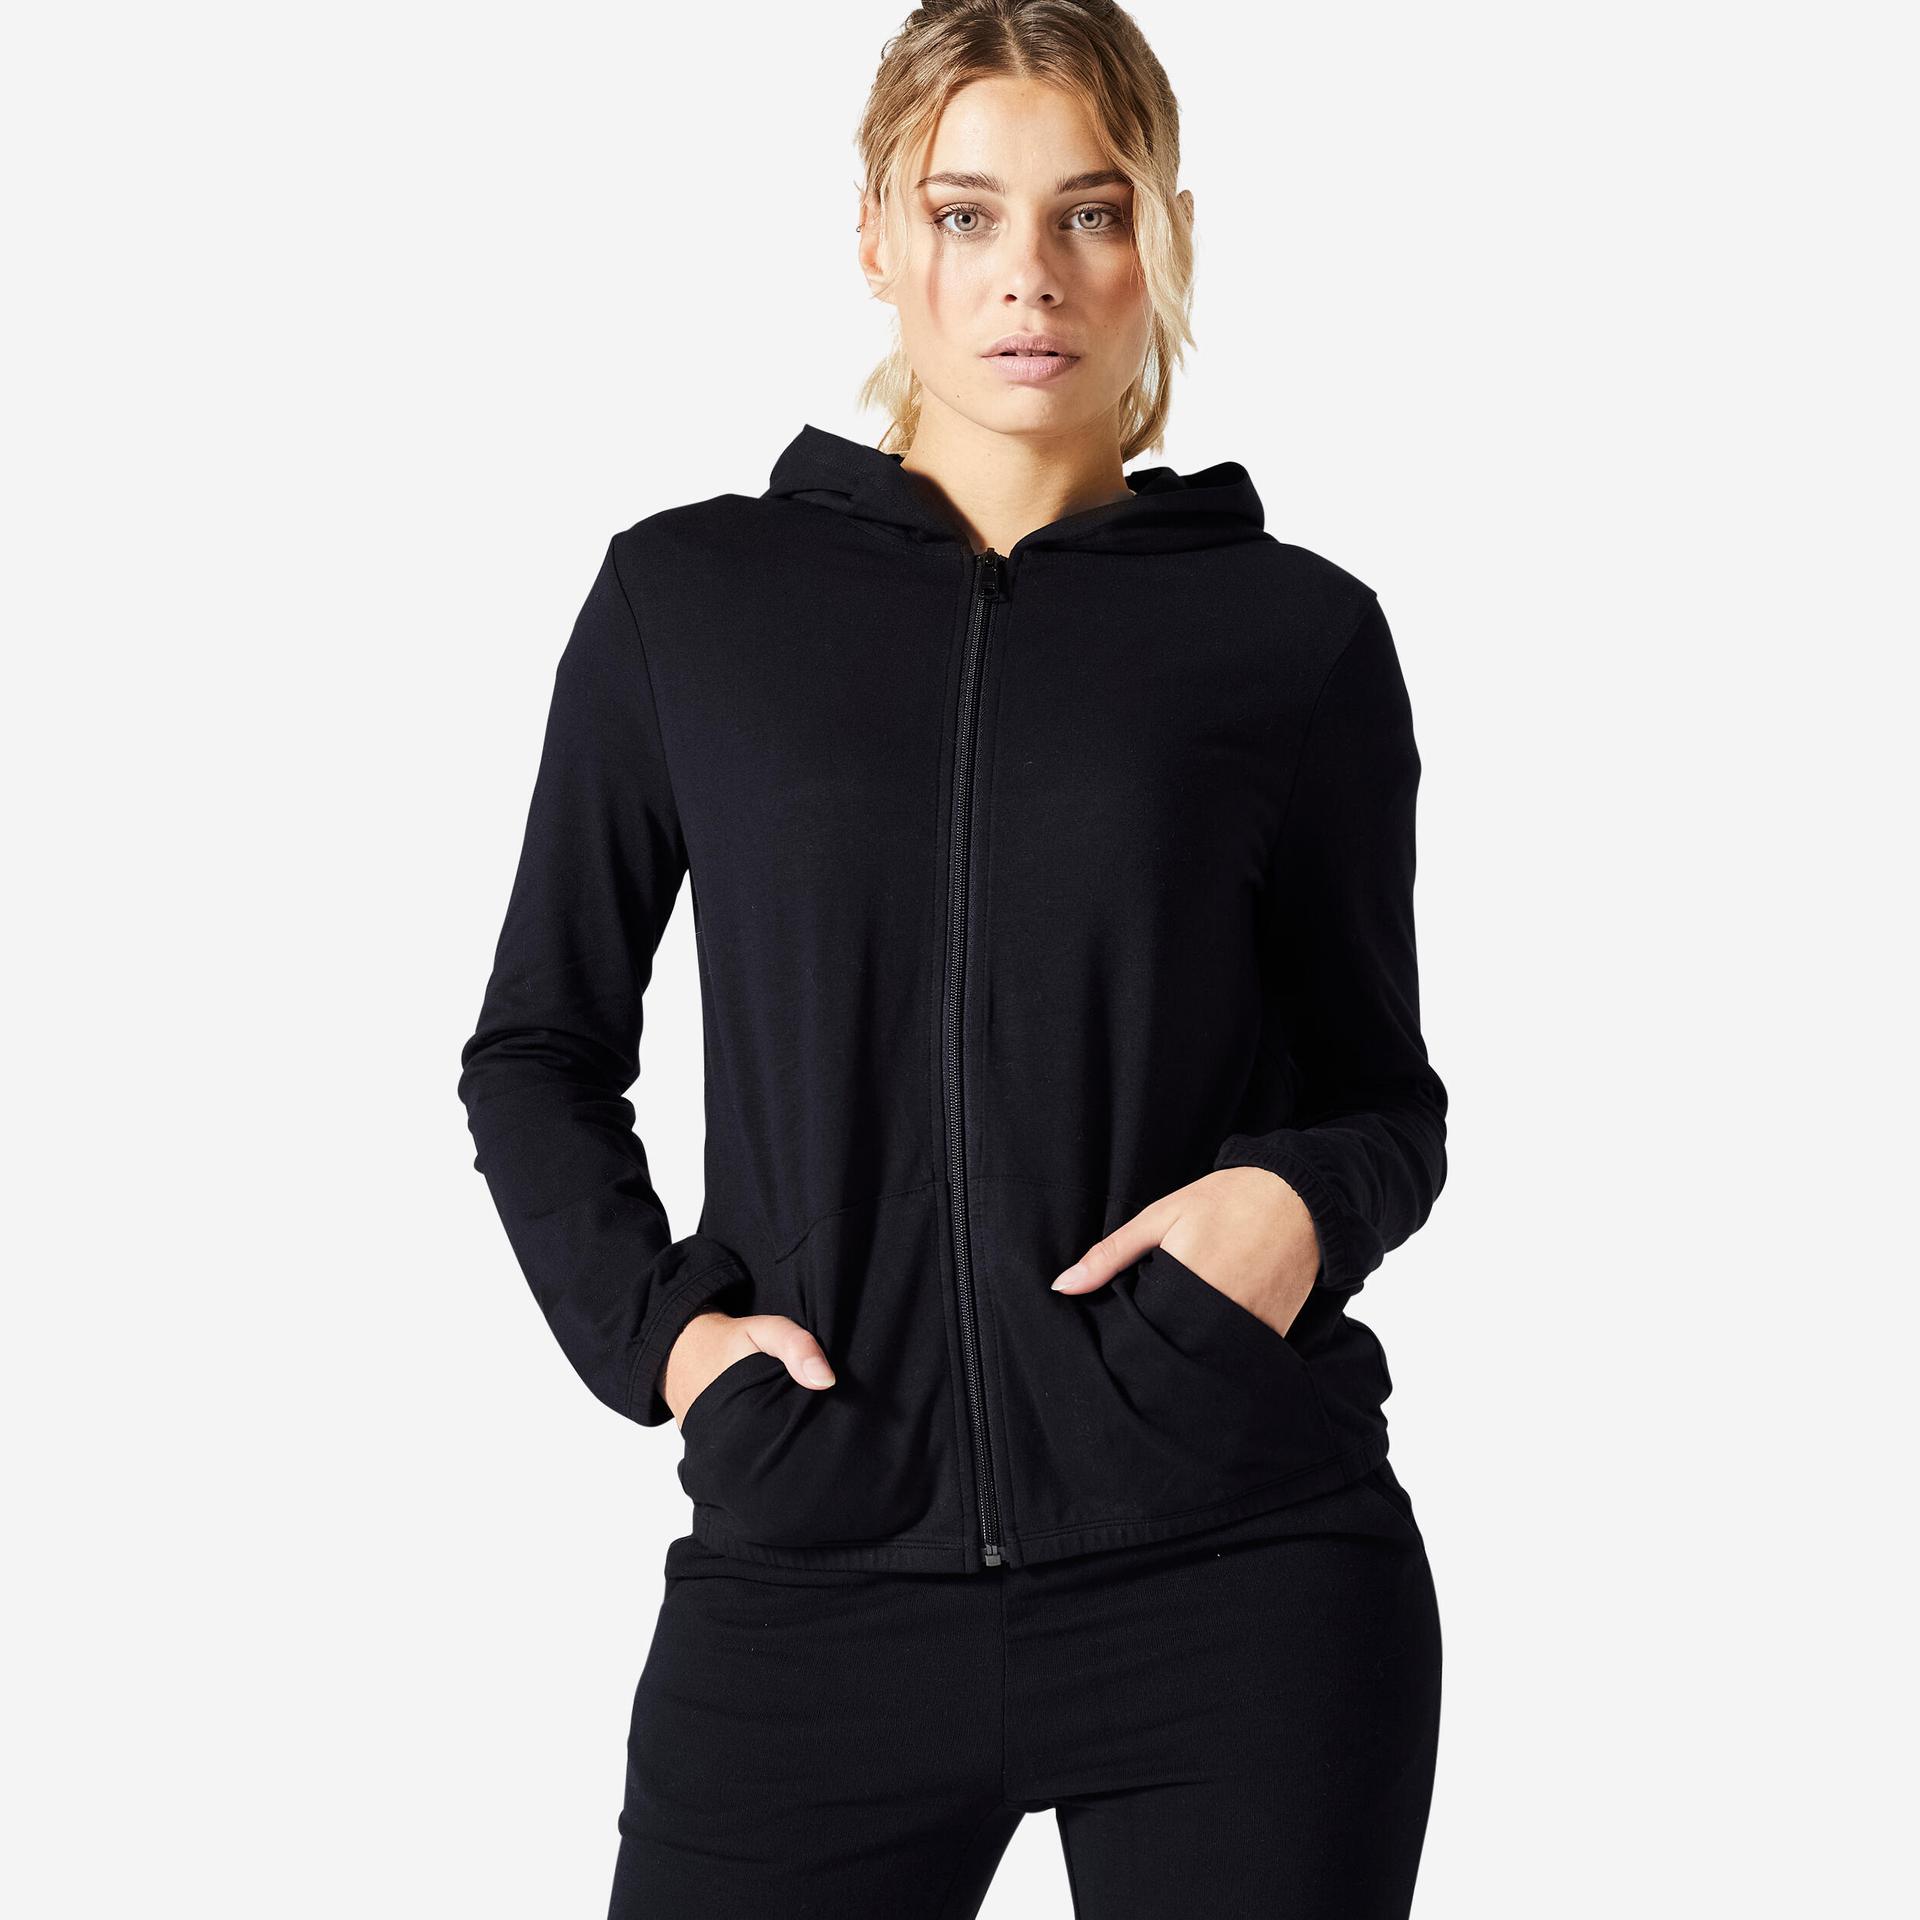 women-sweatshirt-jacket-with-hoodie-for-gym-100-black